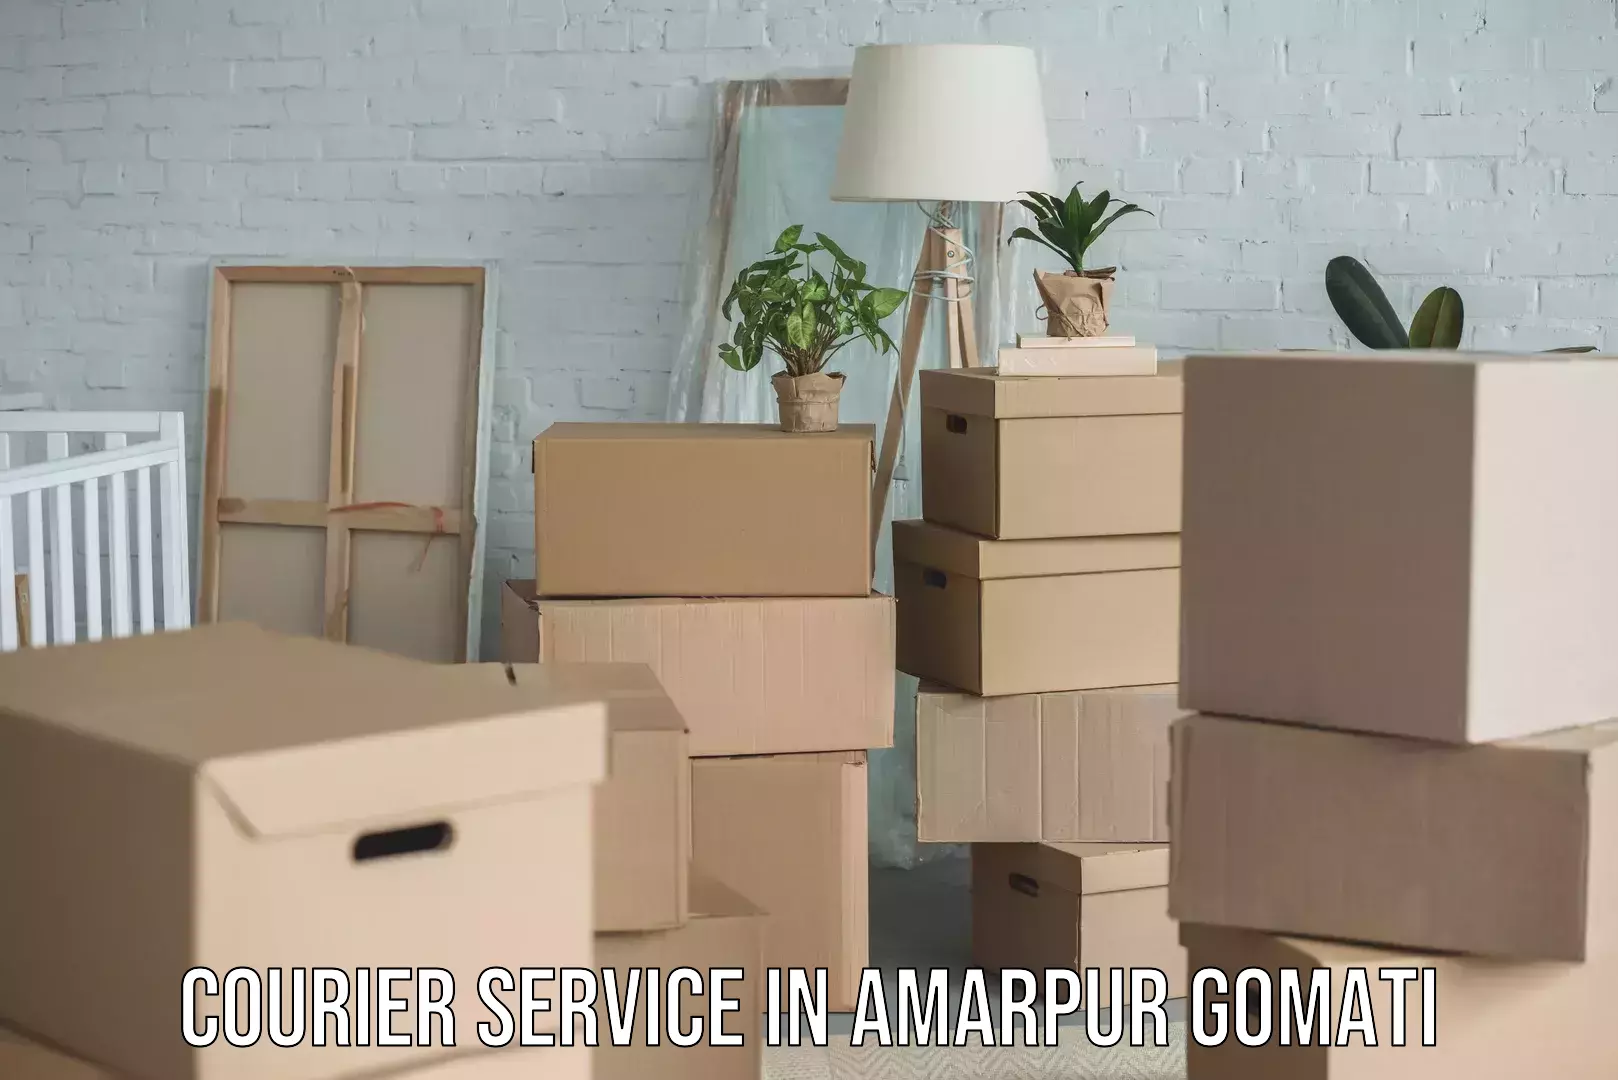 Specialized shipment handling in Amarpur Gomati